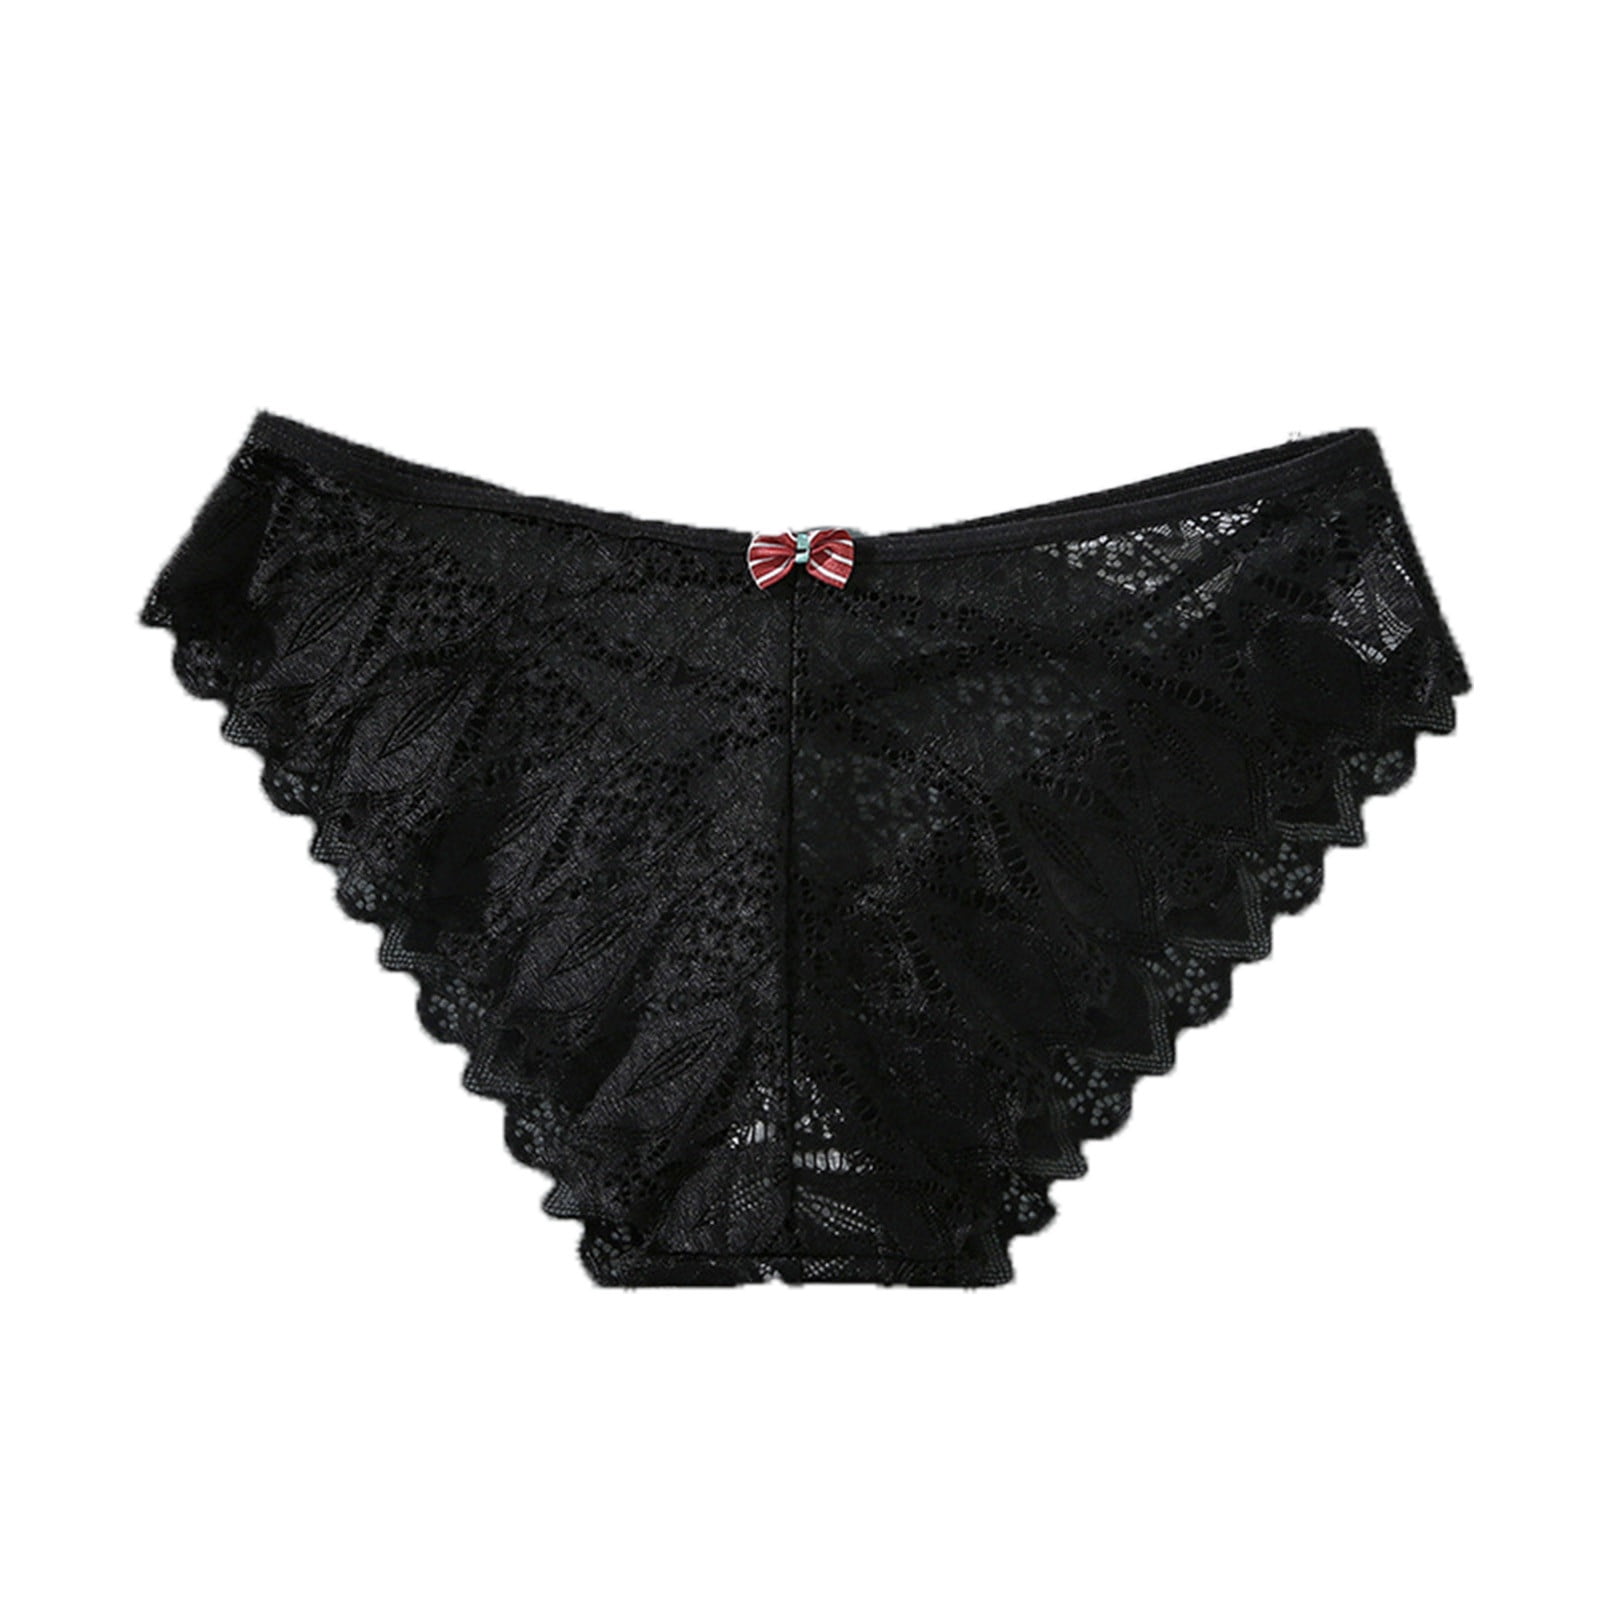 Tawop Edible Underwear for Women Women'S Sexy Underwear: Pure Cotton  Crotch, Middle Waist, Lace, Non Marking, Belly Tightening, Cross Binding  Fashionable Briefs 